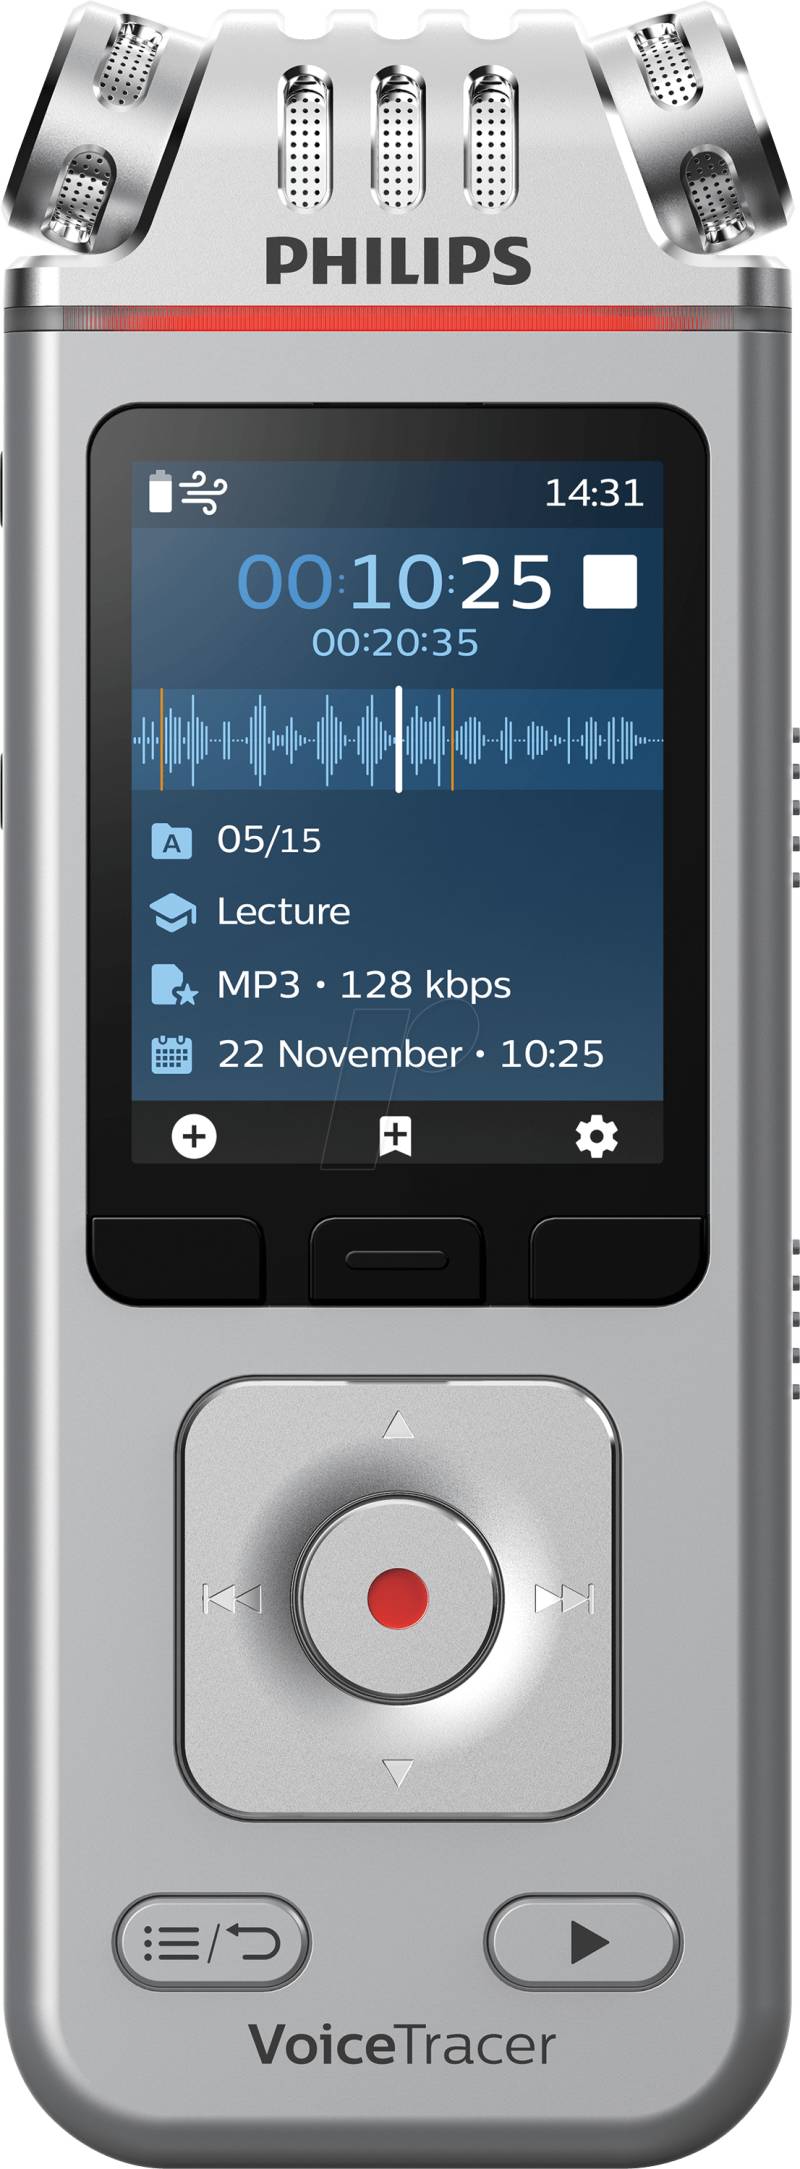 PHILIPS DVT4110 - VoiceTracer Audiorecorder von Philips